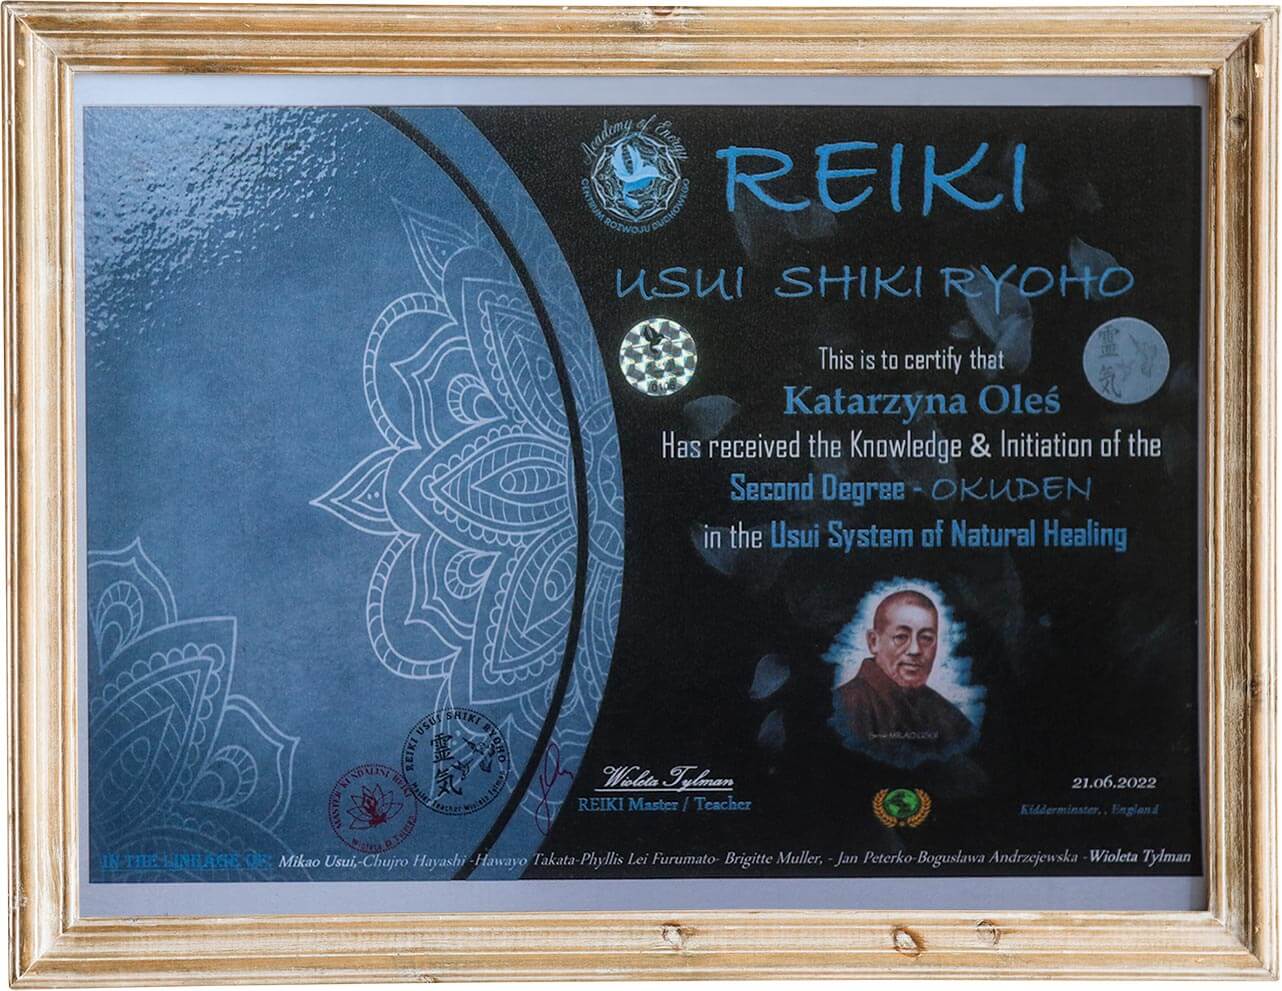 Certyfikat "Reiki" - drugi stopień